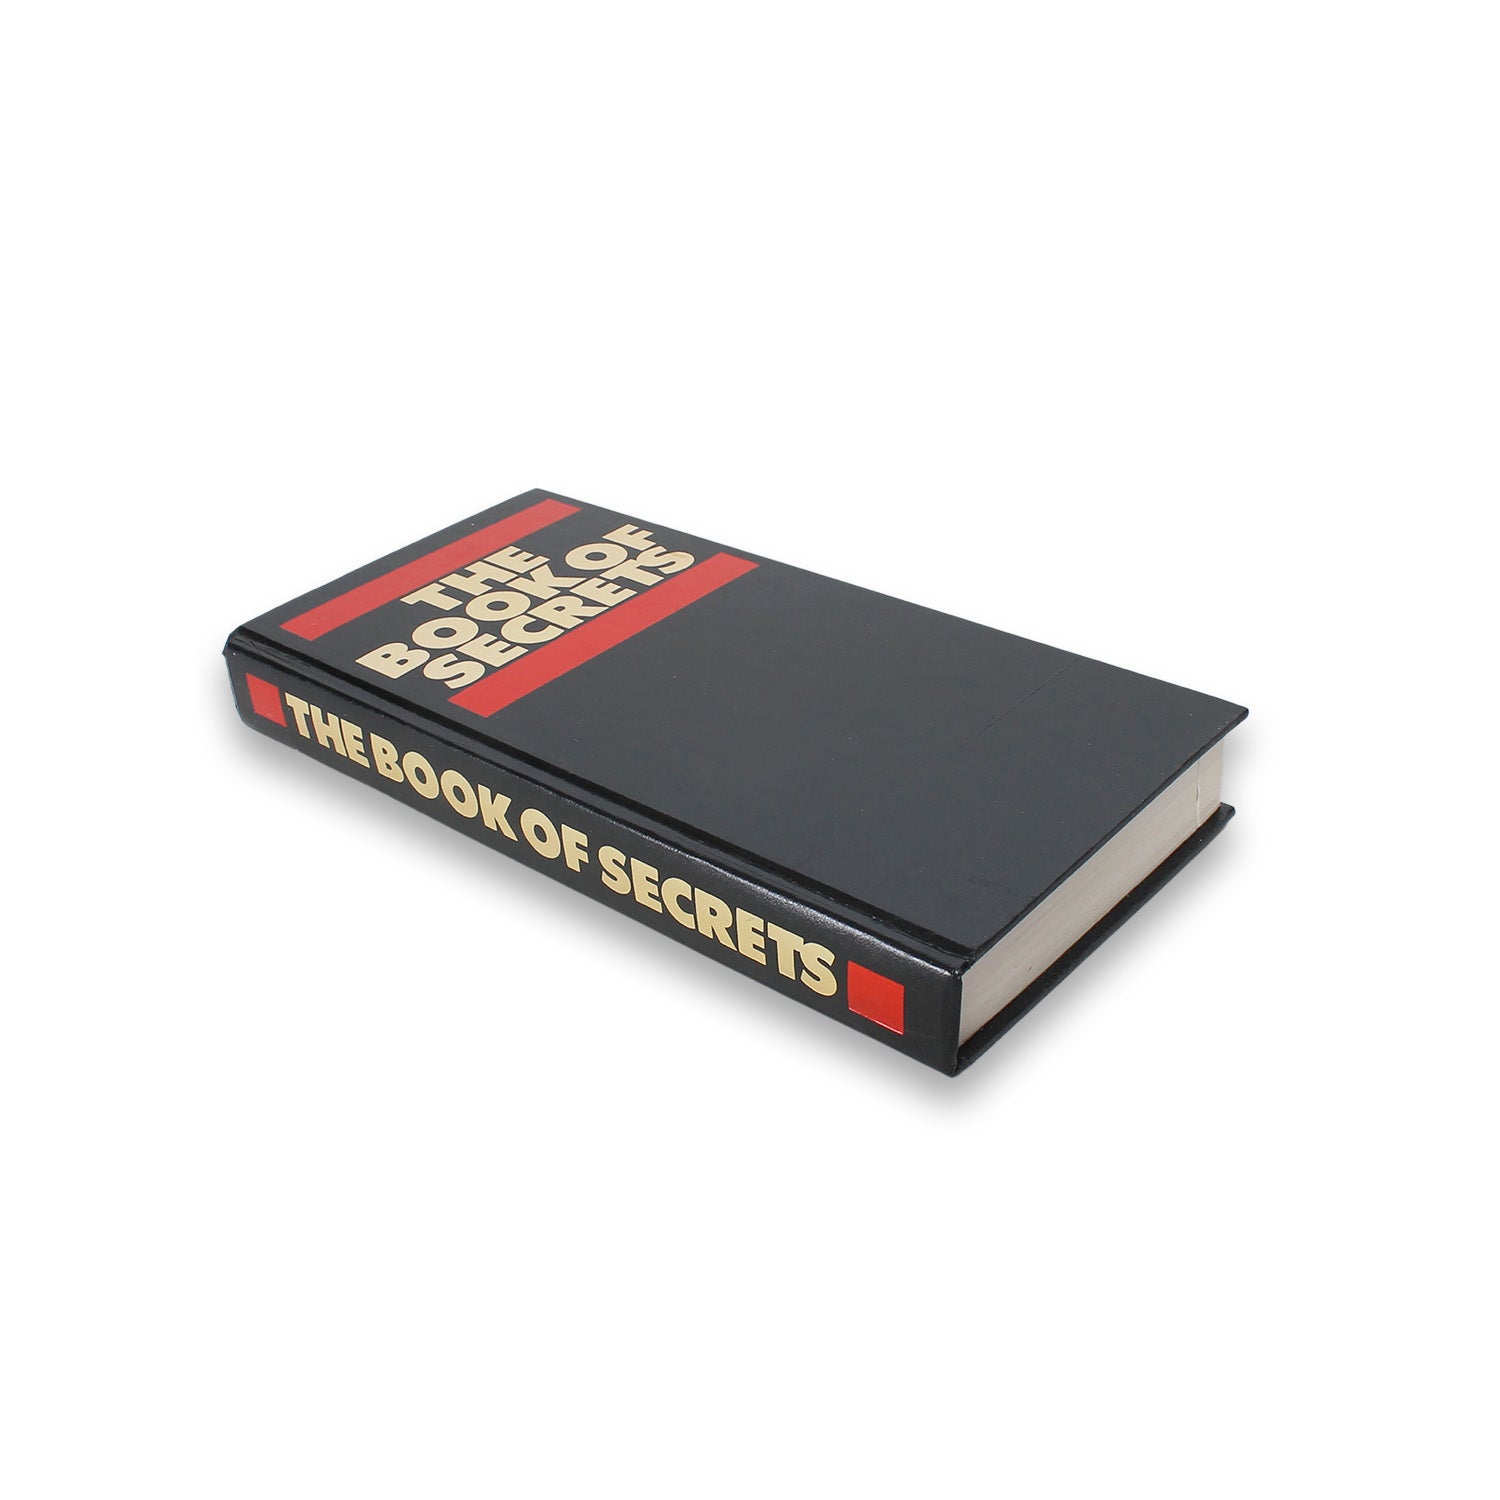 The Book of Secrets - Extra Tall Hollow Book Safe - Secret Storage Books